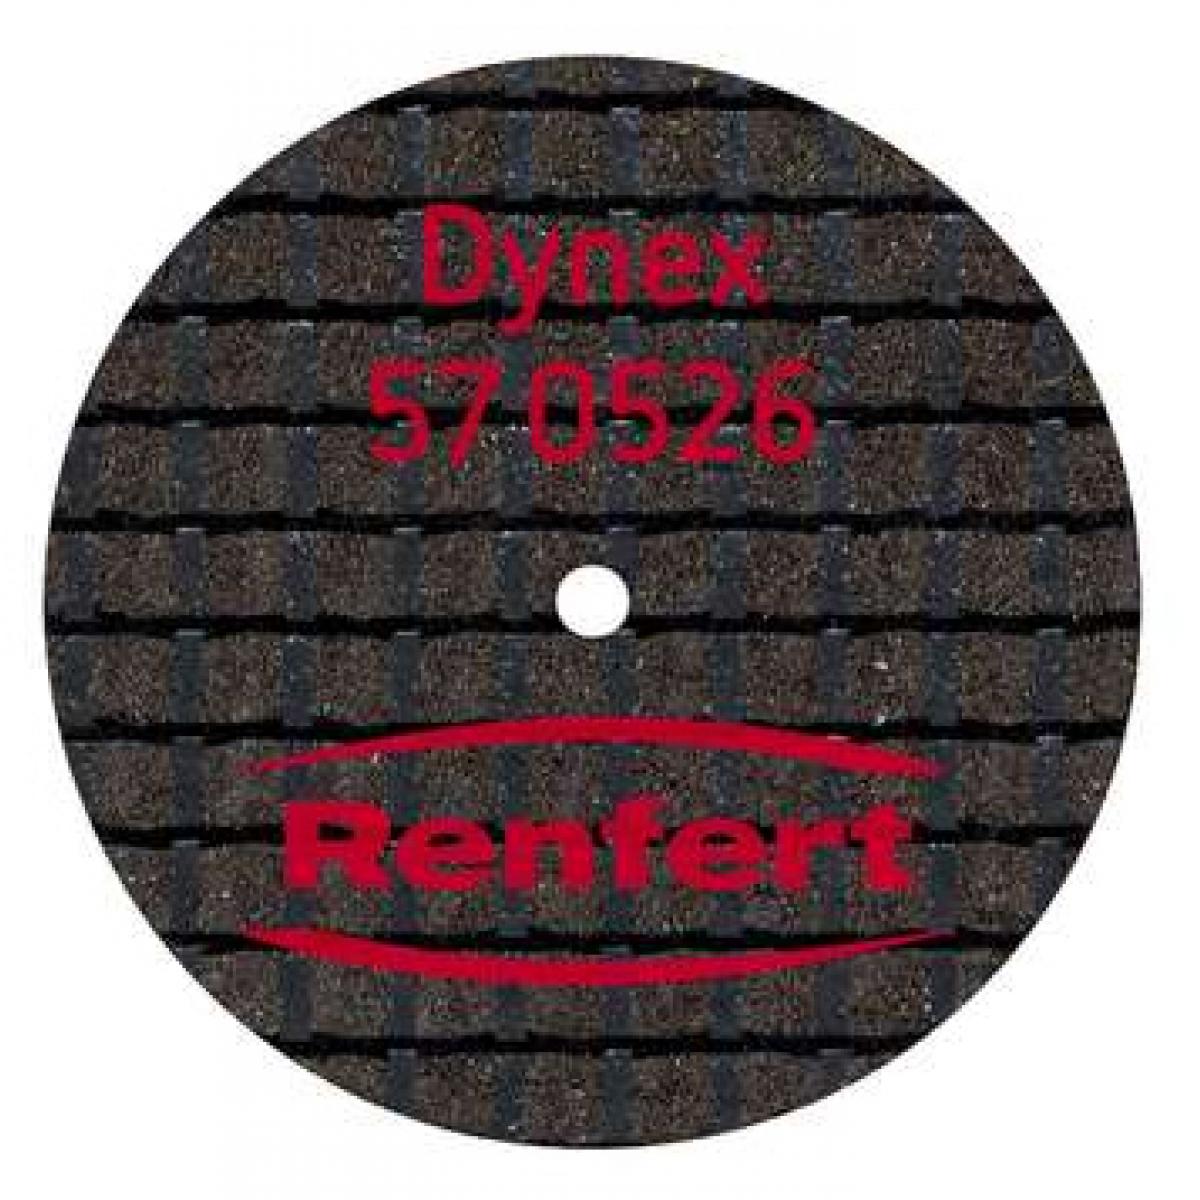 DISCO DYNEX 26X0 5MM CX20 570526 RENFERT -